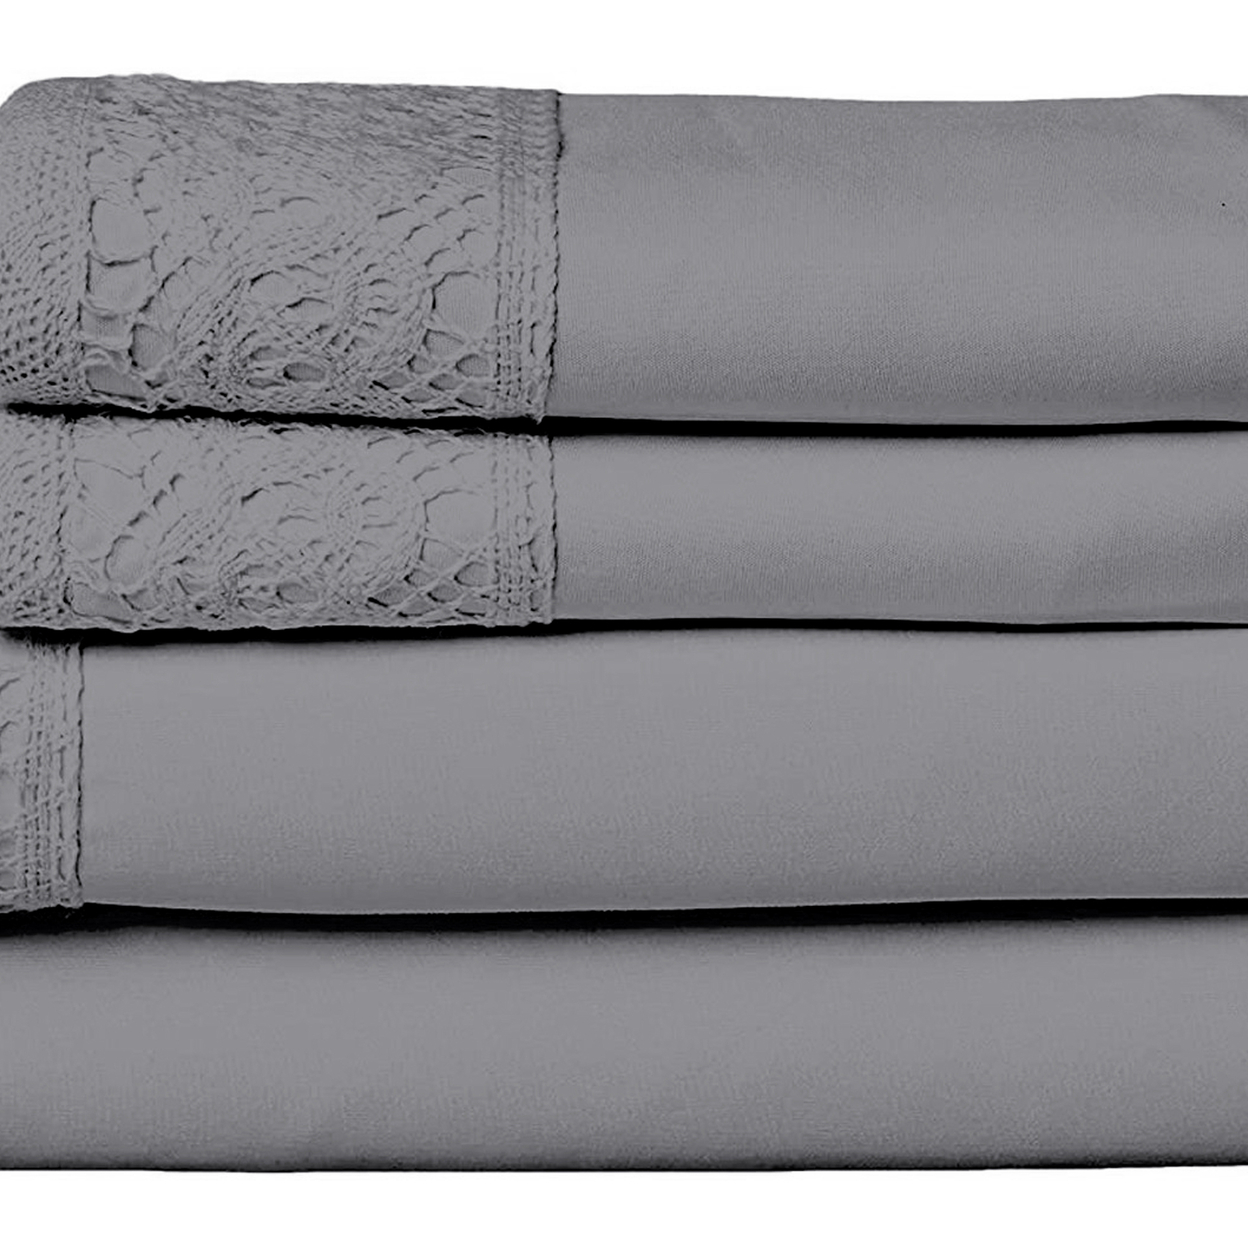 Edra 4 Piece Microfiber Full Size Bed Sheet Set With Crochet Lace, Gray- Saltoro Sherpi